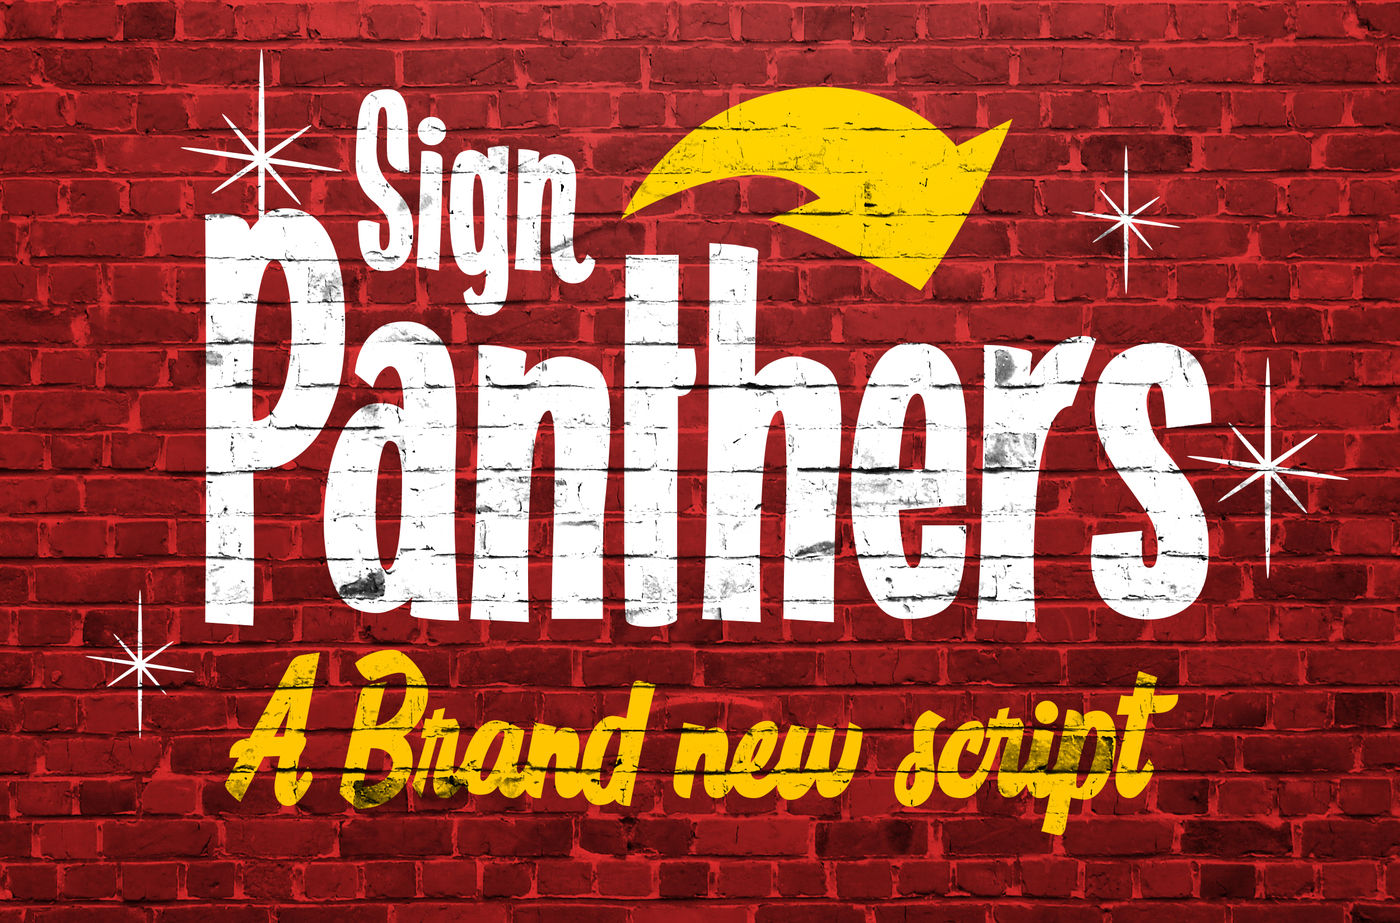 Sign Panthers Brush Script Vintage By Konstantine Studio Thehungryjpeg Com